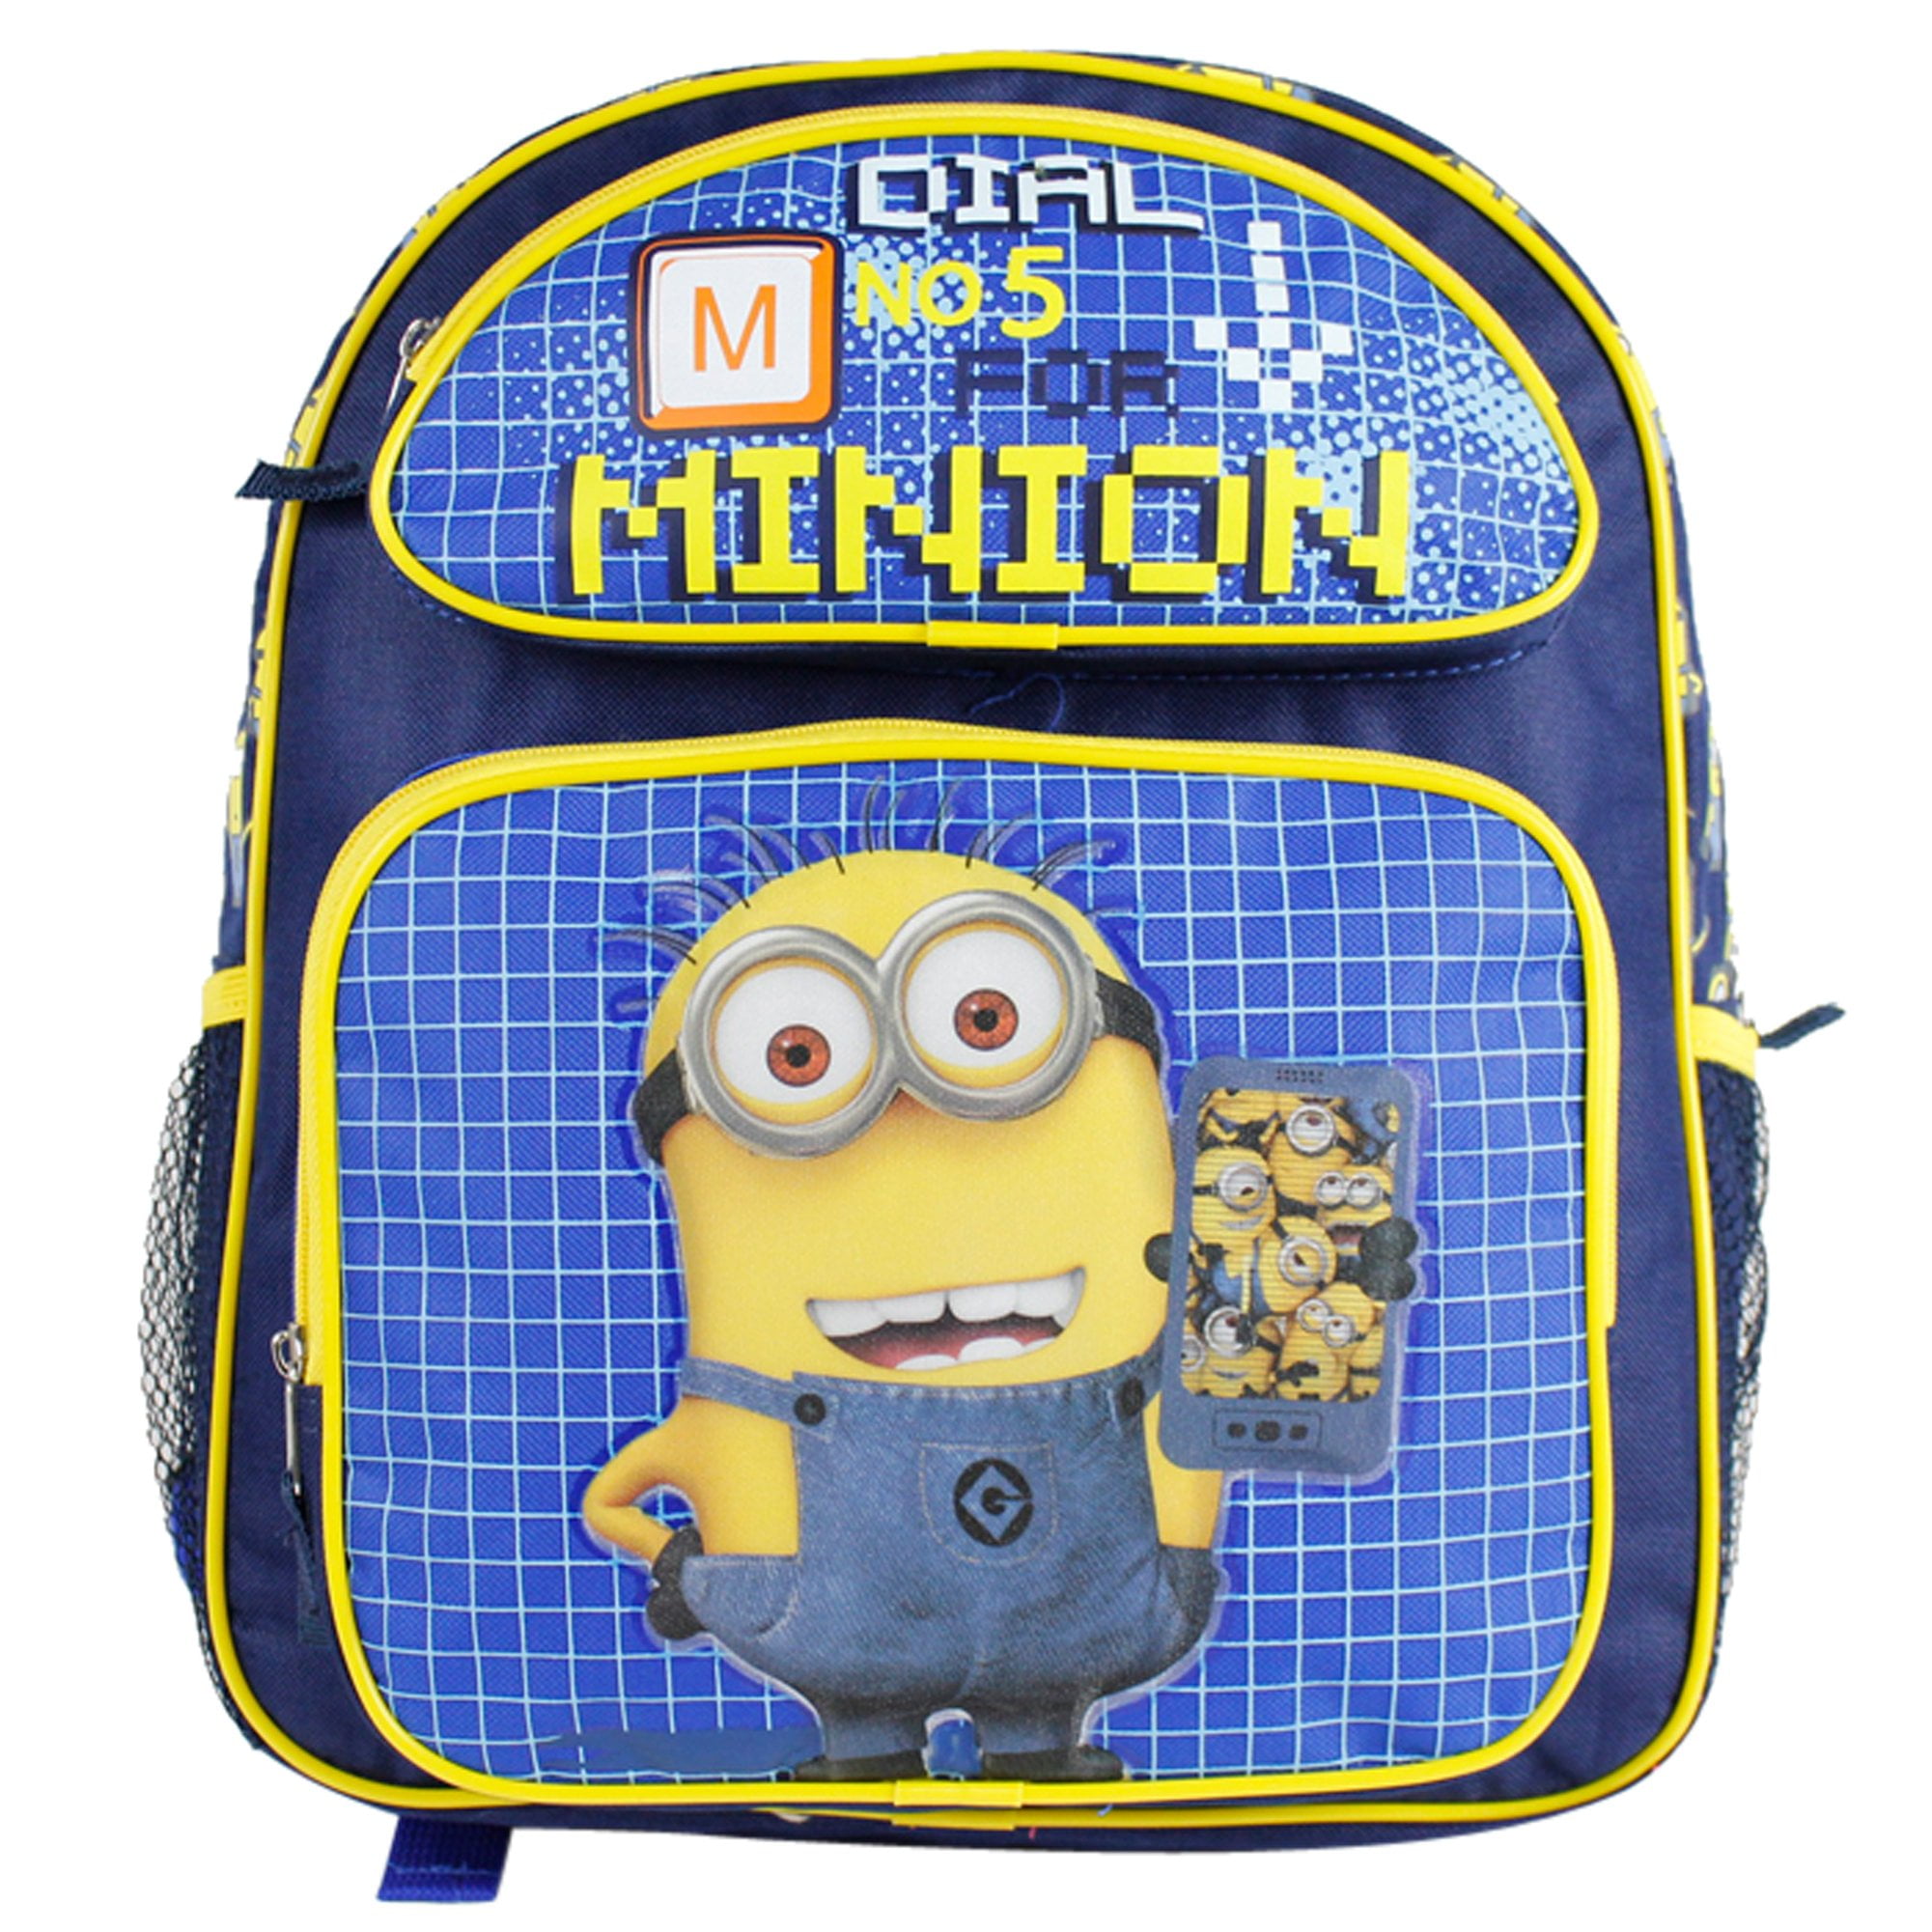 Children Backpack Minions School